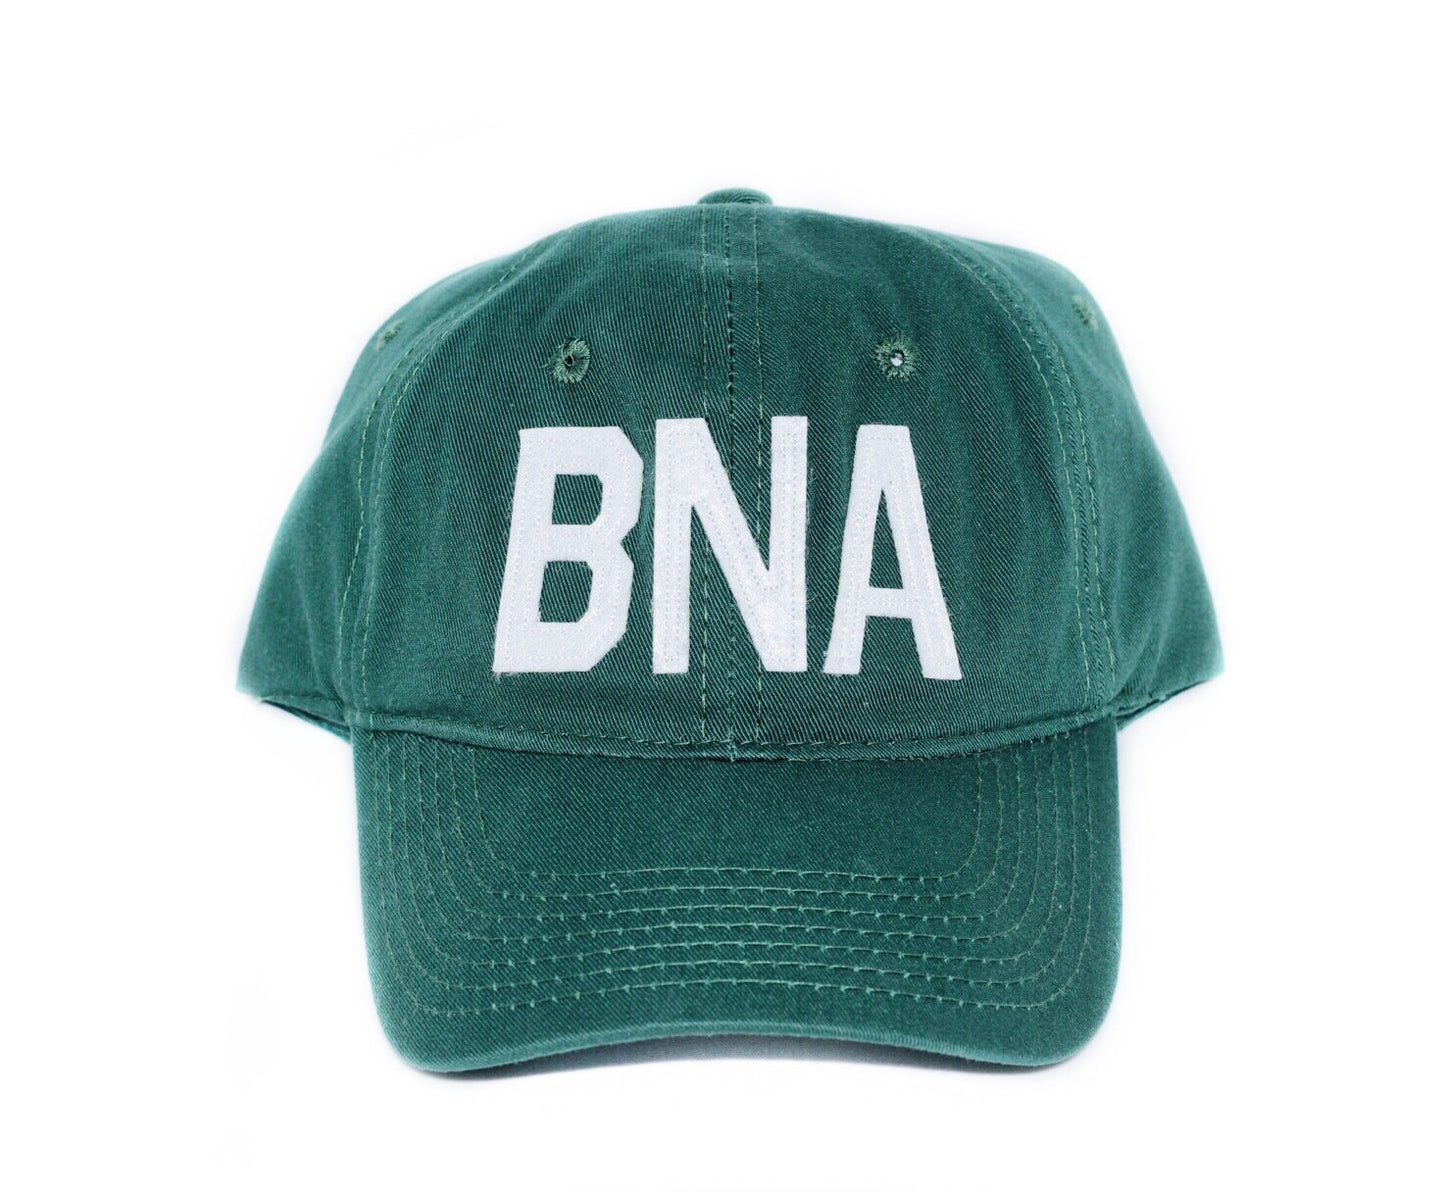 BNA - Nashville, TN Hat